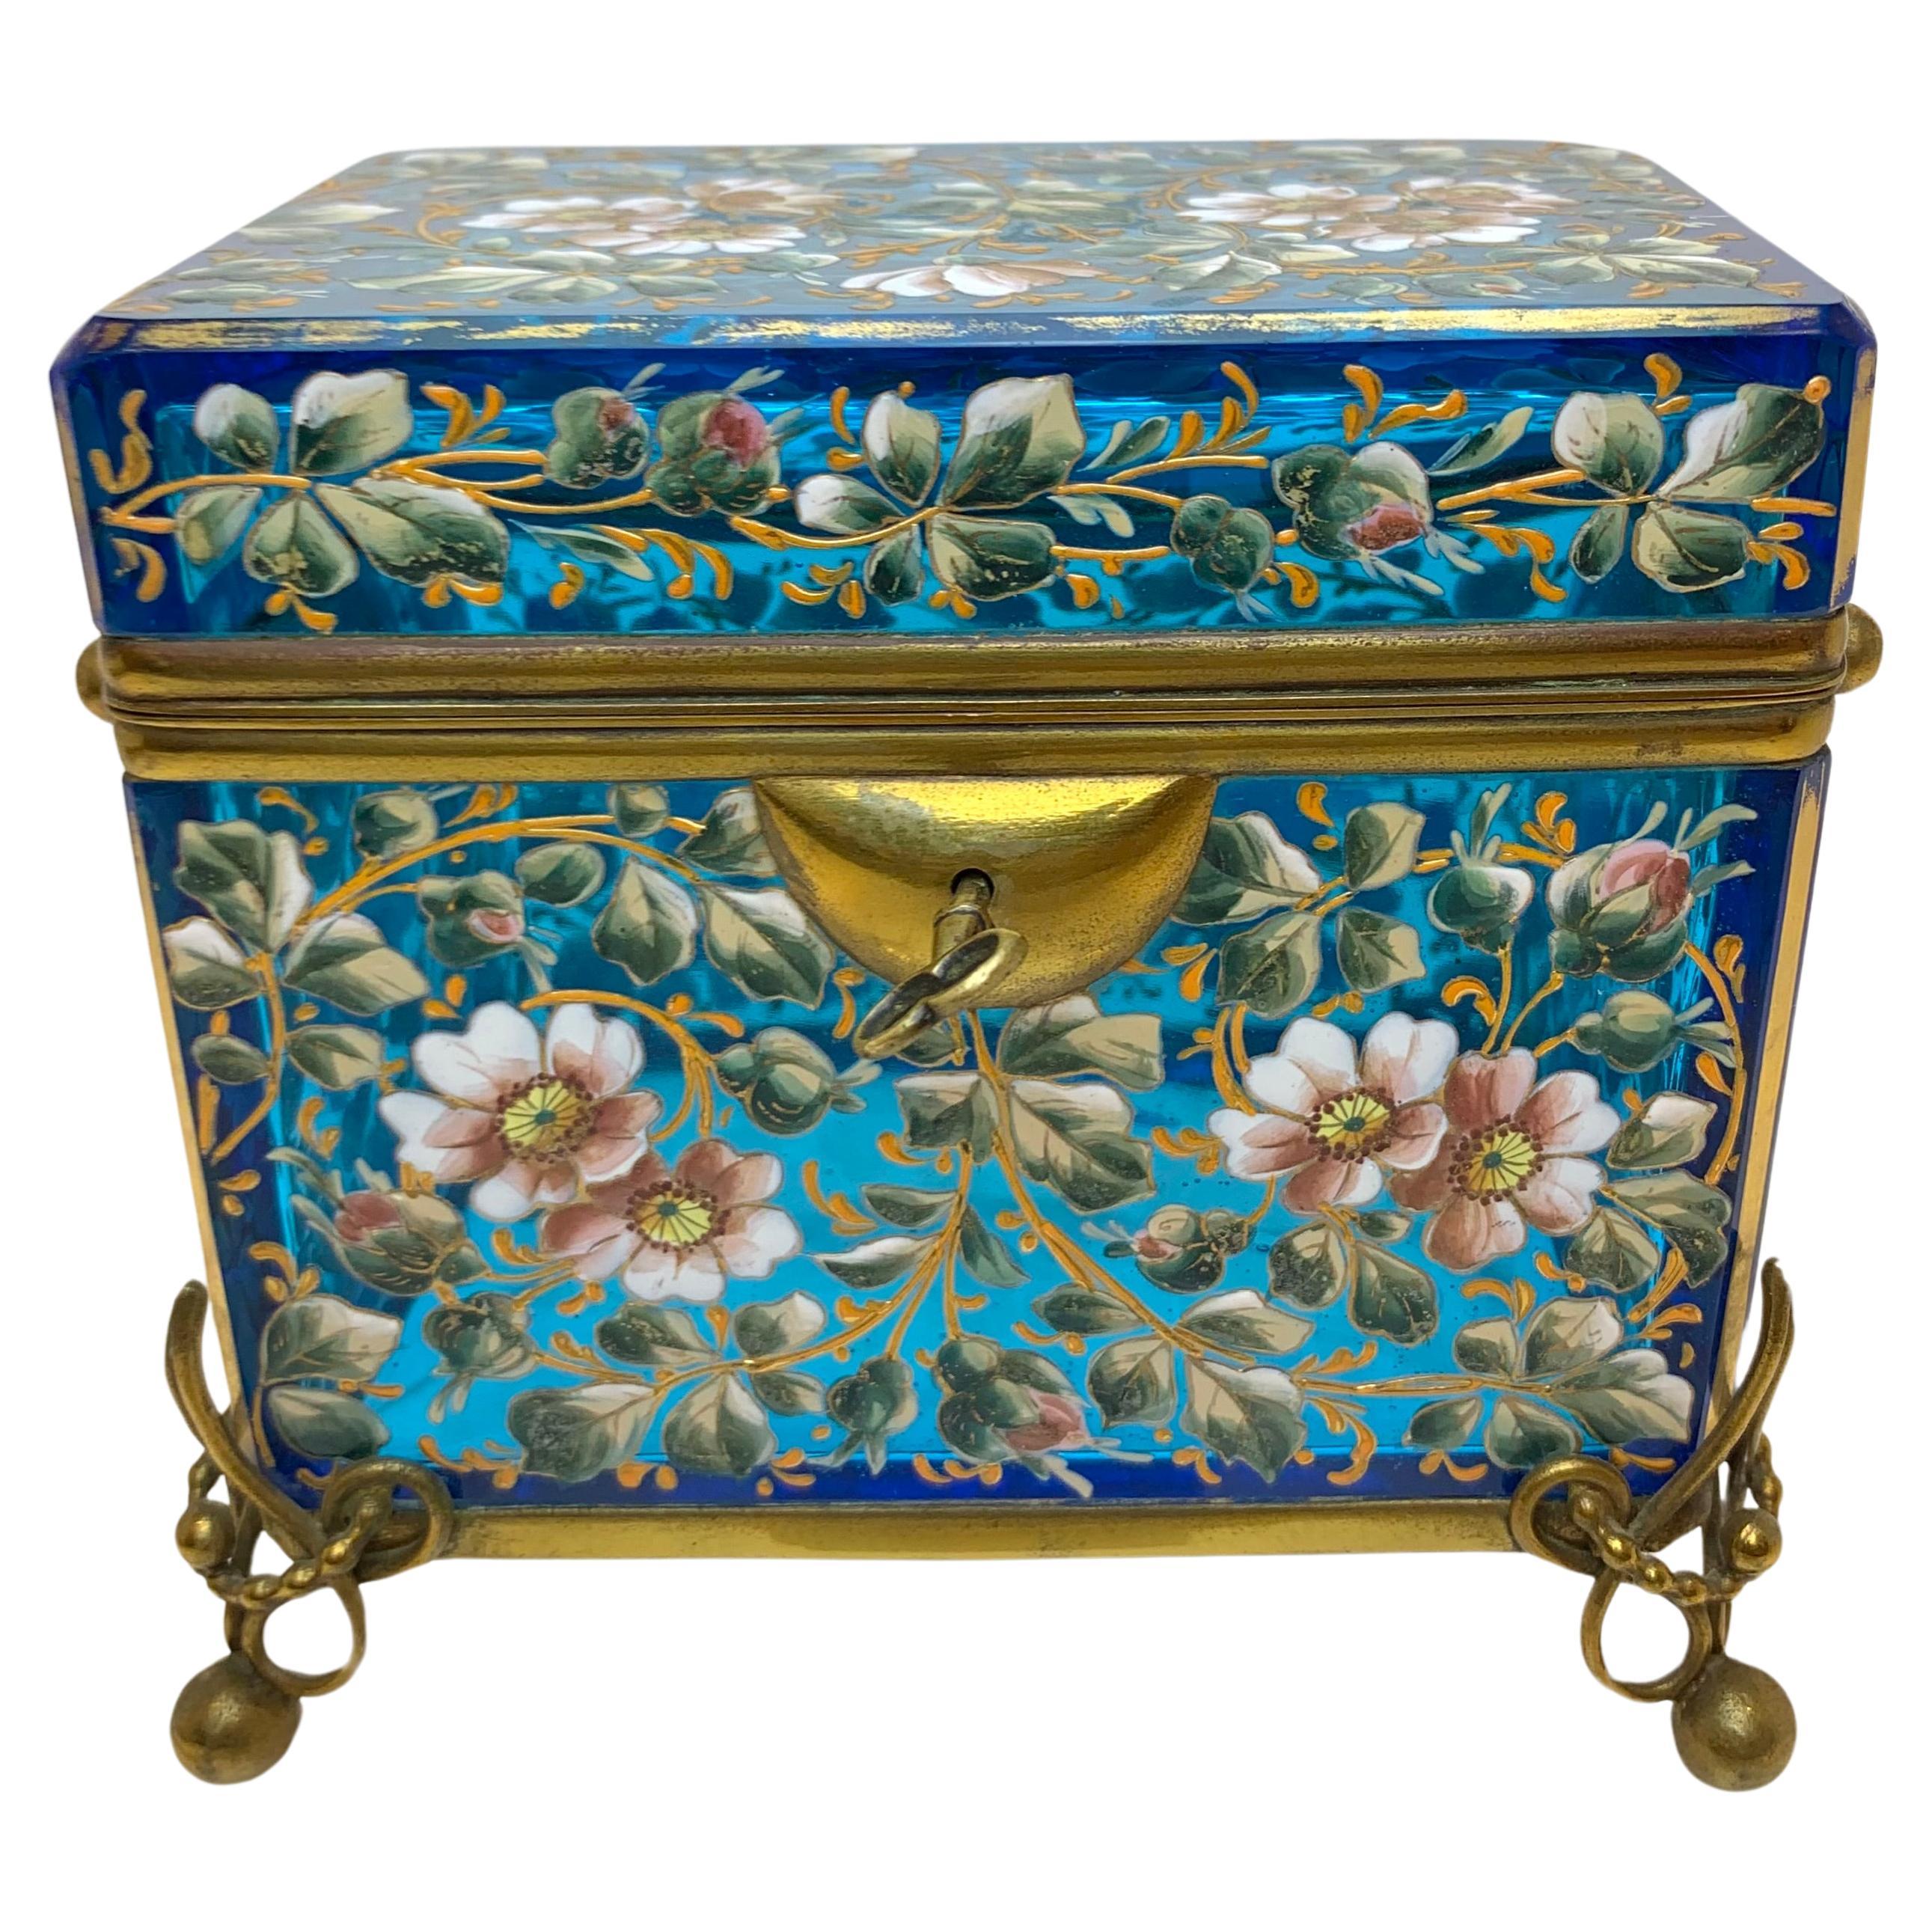 Antique Bohemian Moser Enameled Glass Jewelry Casket Box, 19th Century